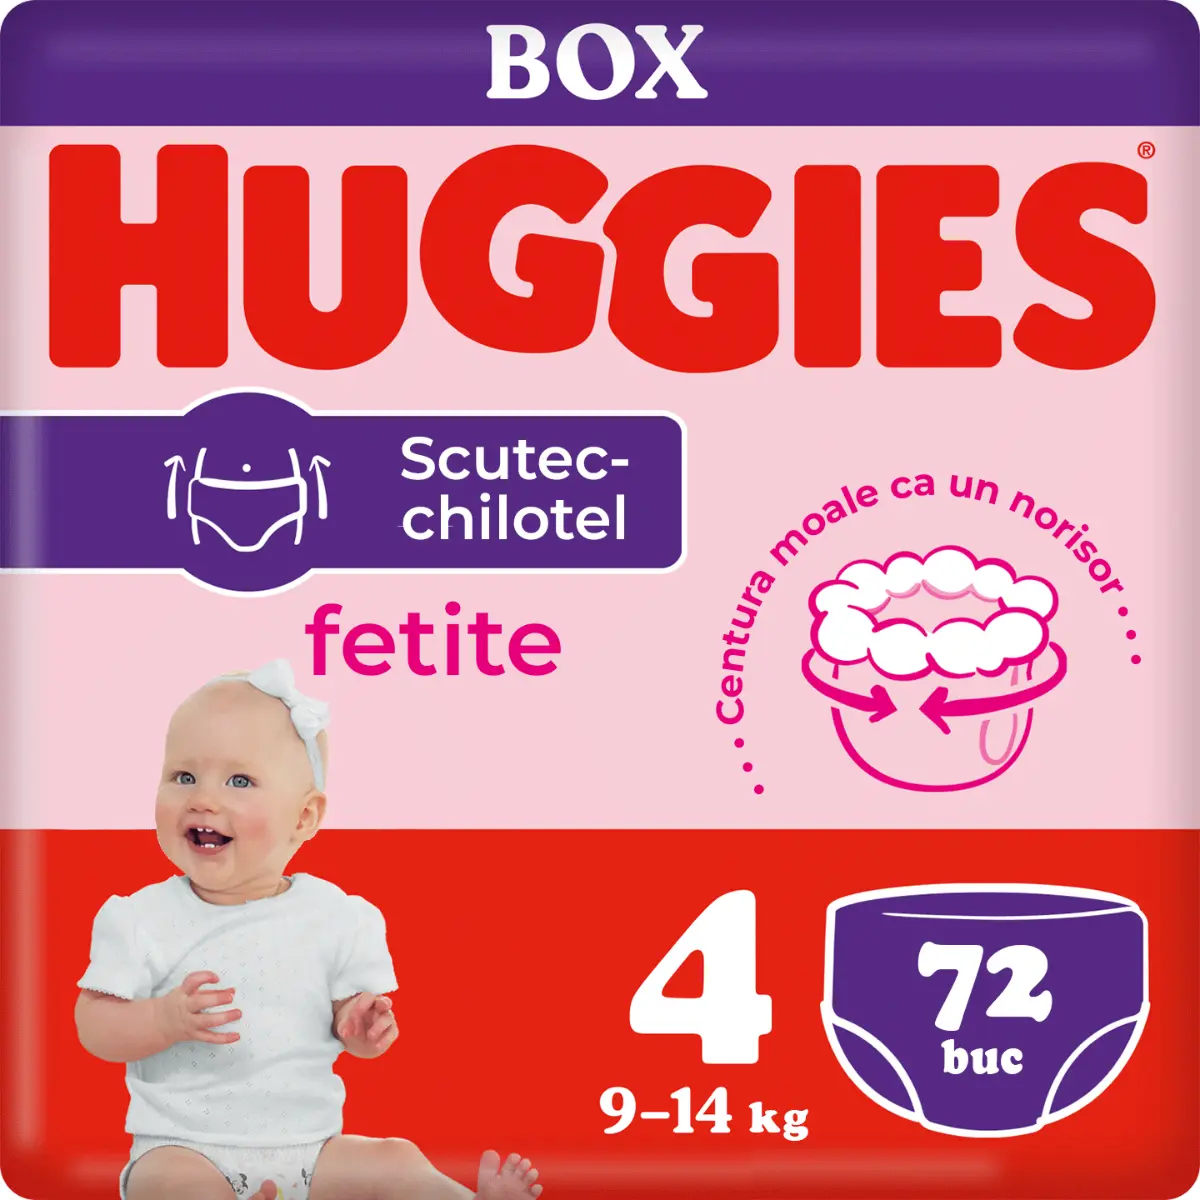 Scutece-chilotel Huggies Pants Fetite, Box (nr 4) 9-14kg, 72 buc